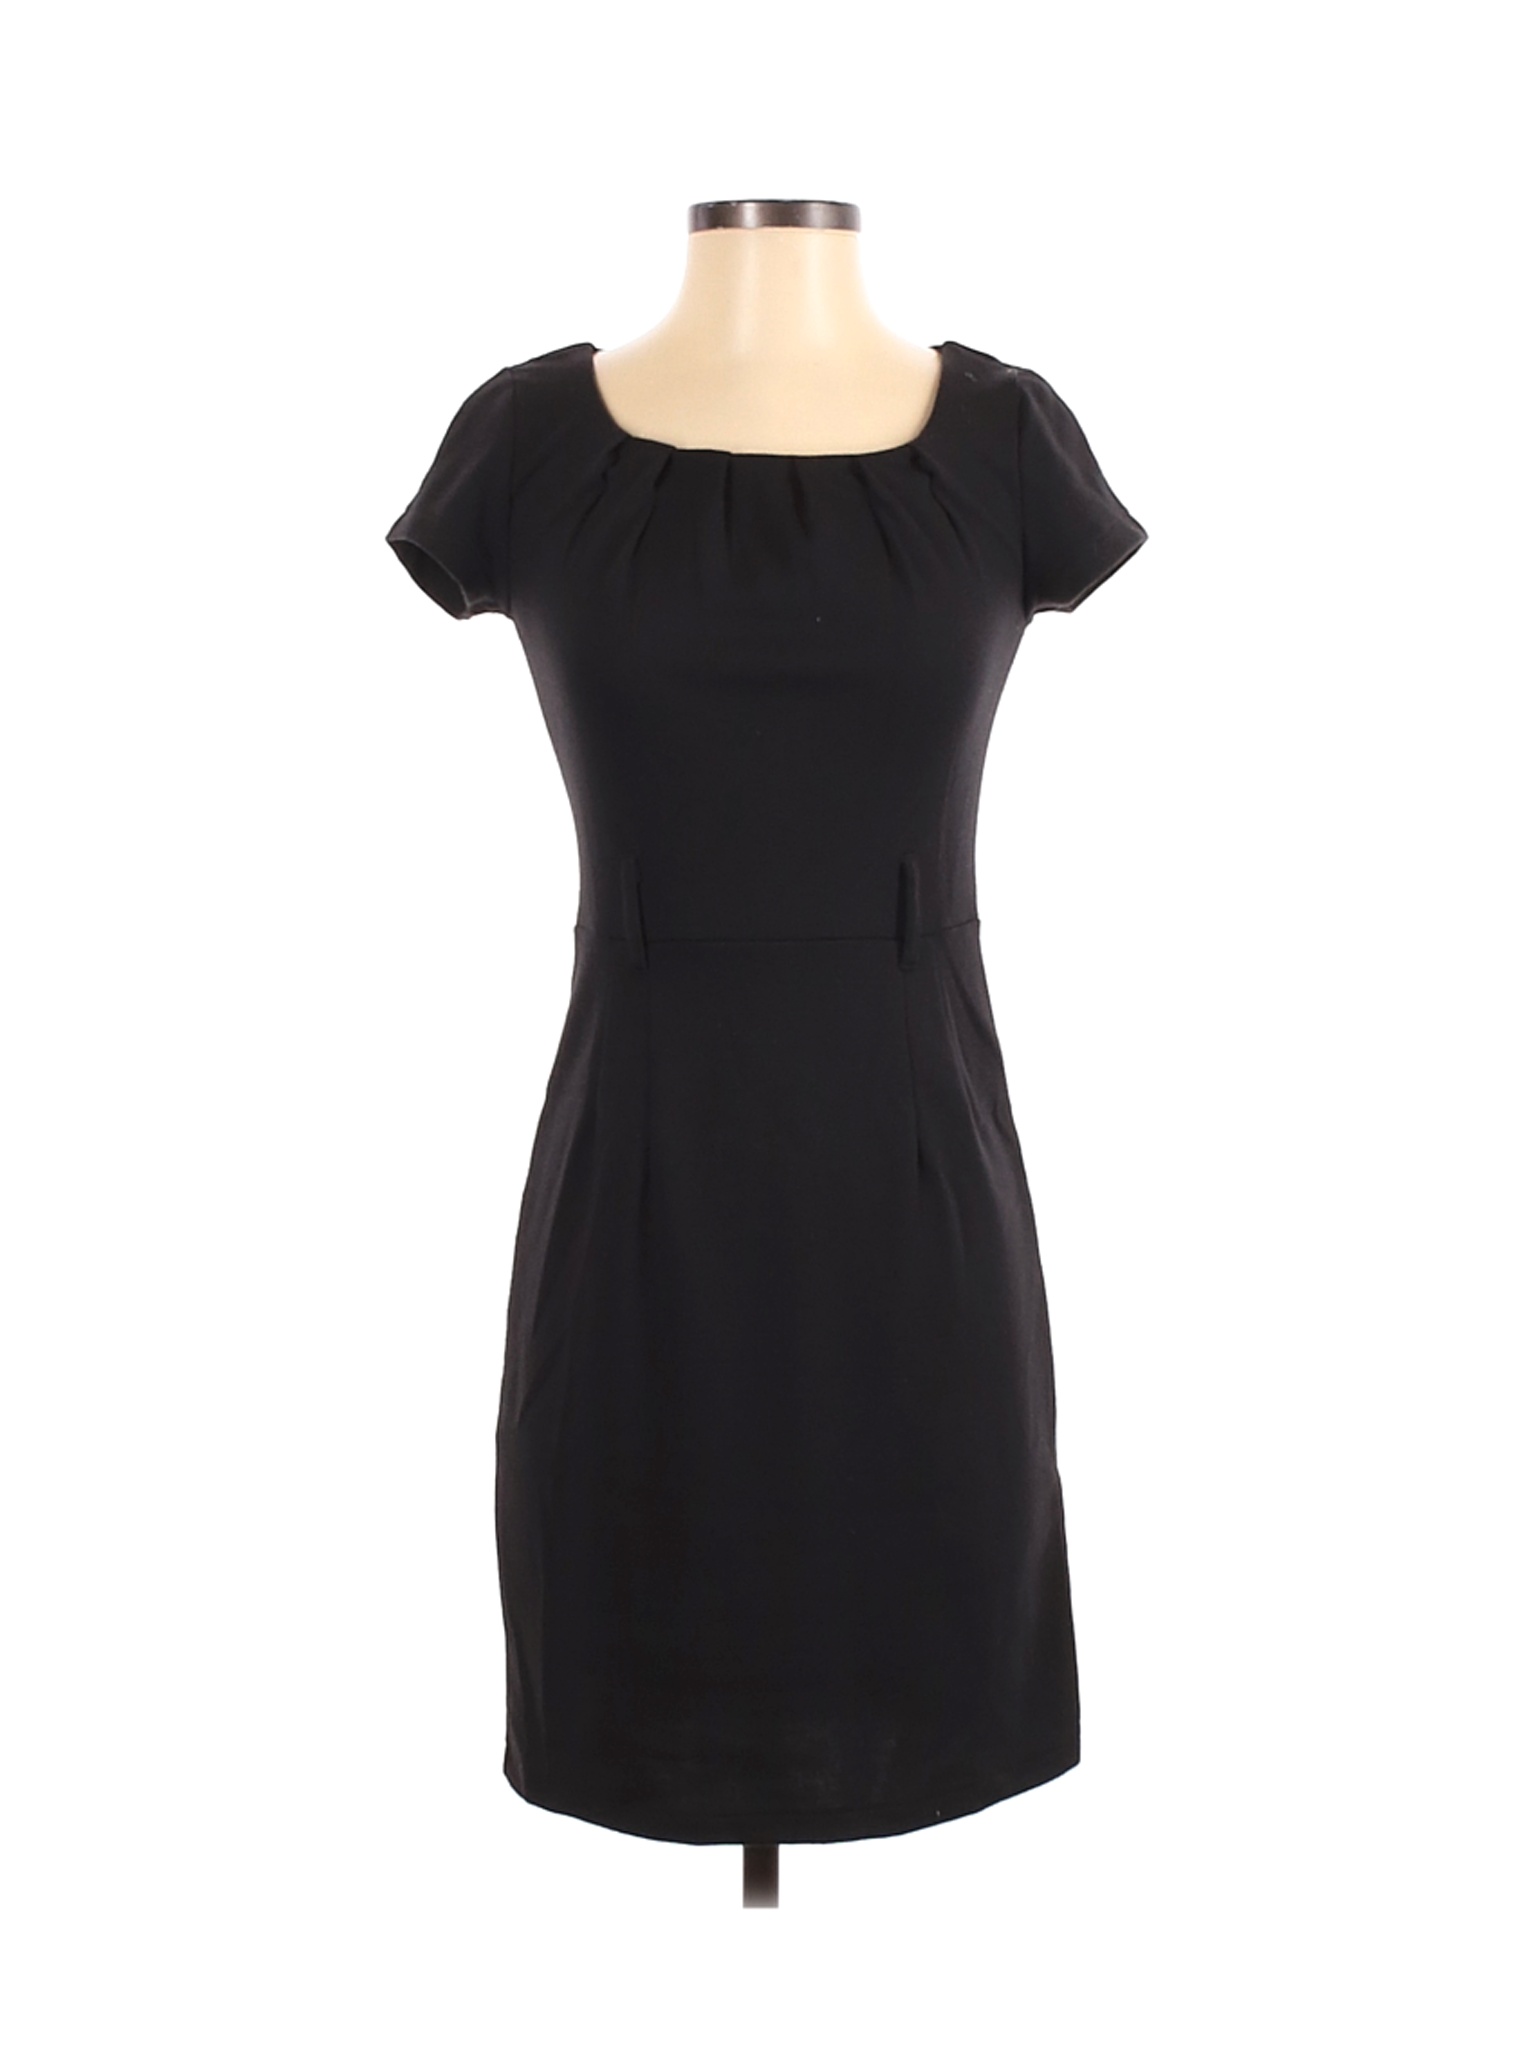 H&M Women Black Casual Dress 4 | eBay